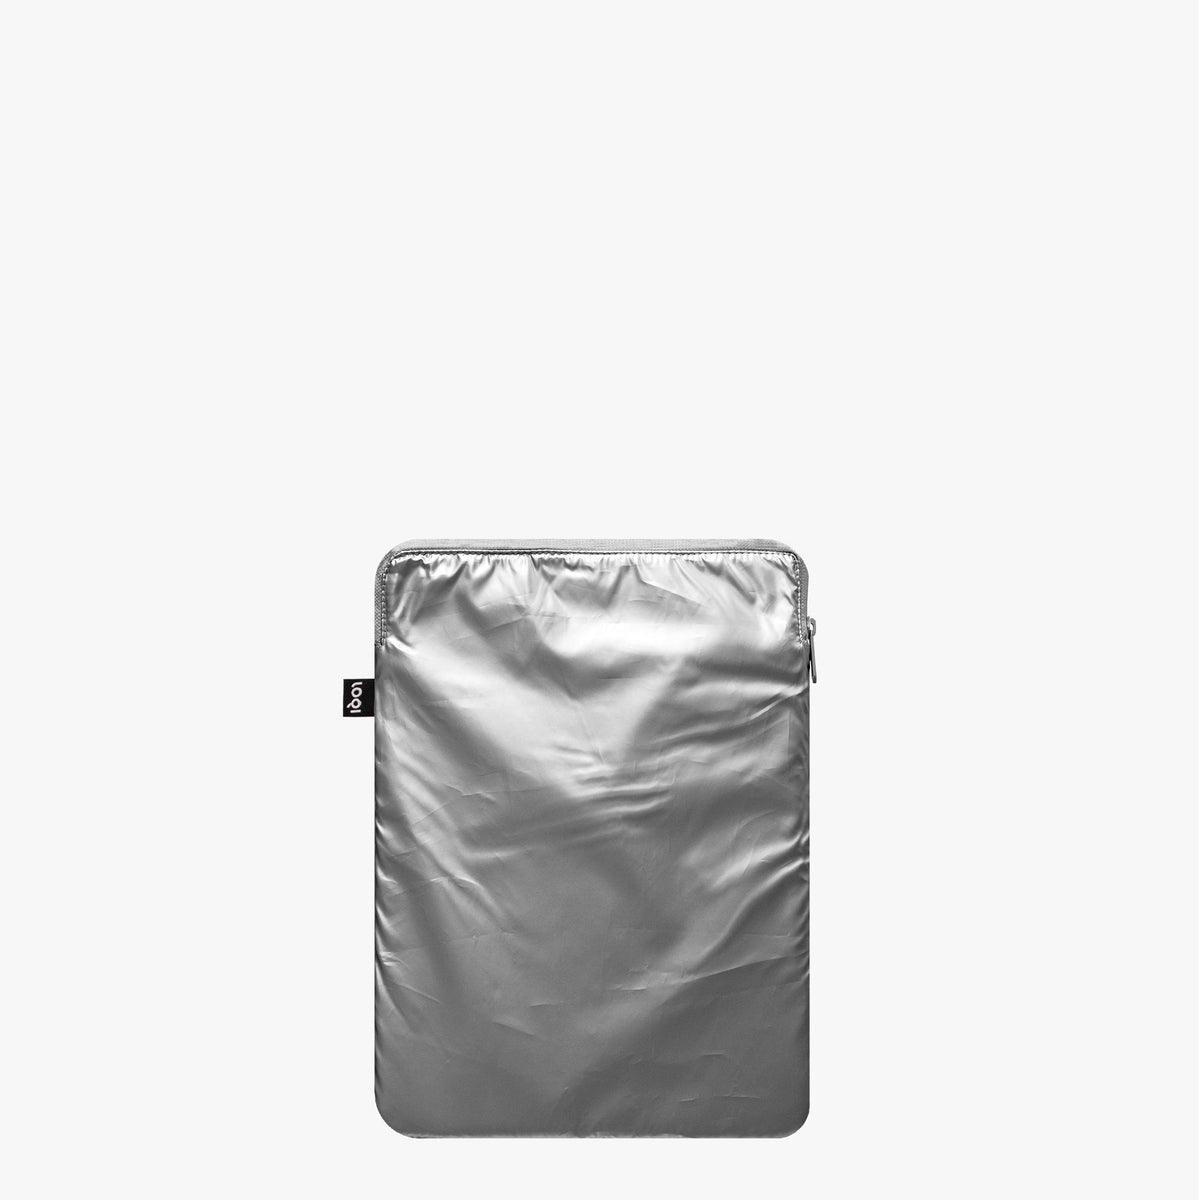 Silver Laptop Cover 26 x 36 cm